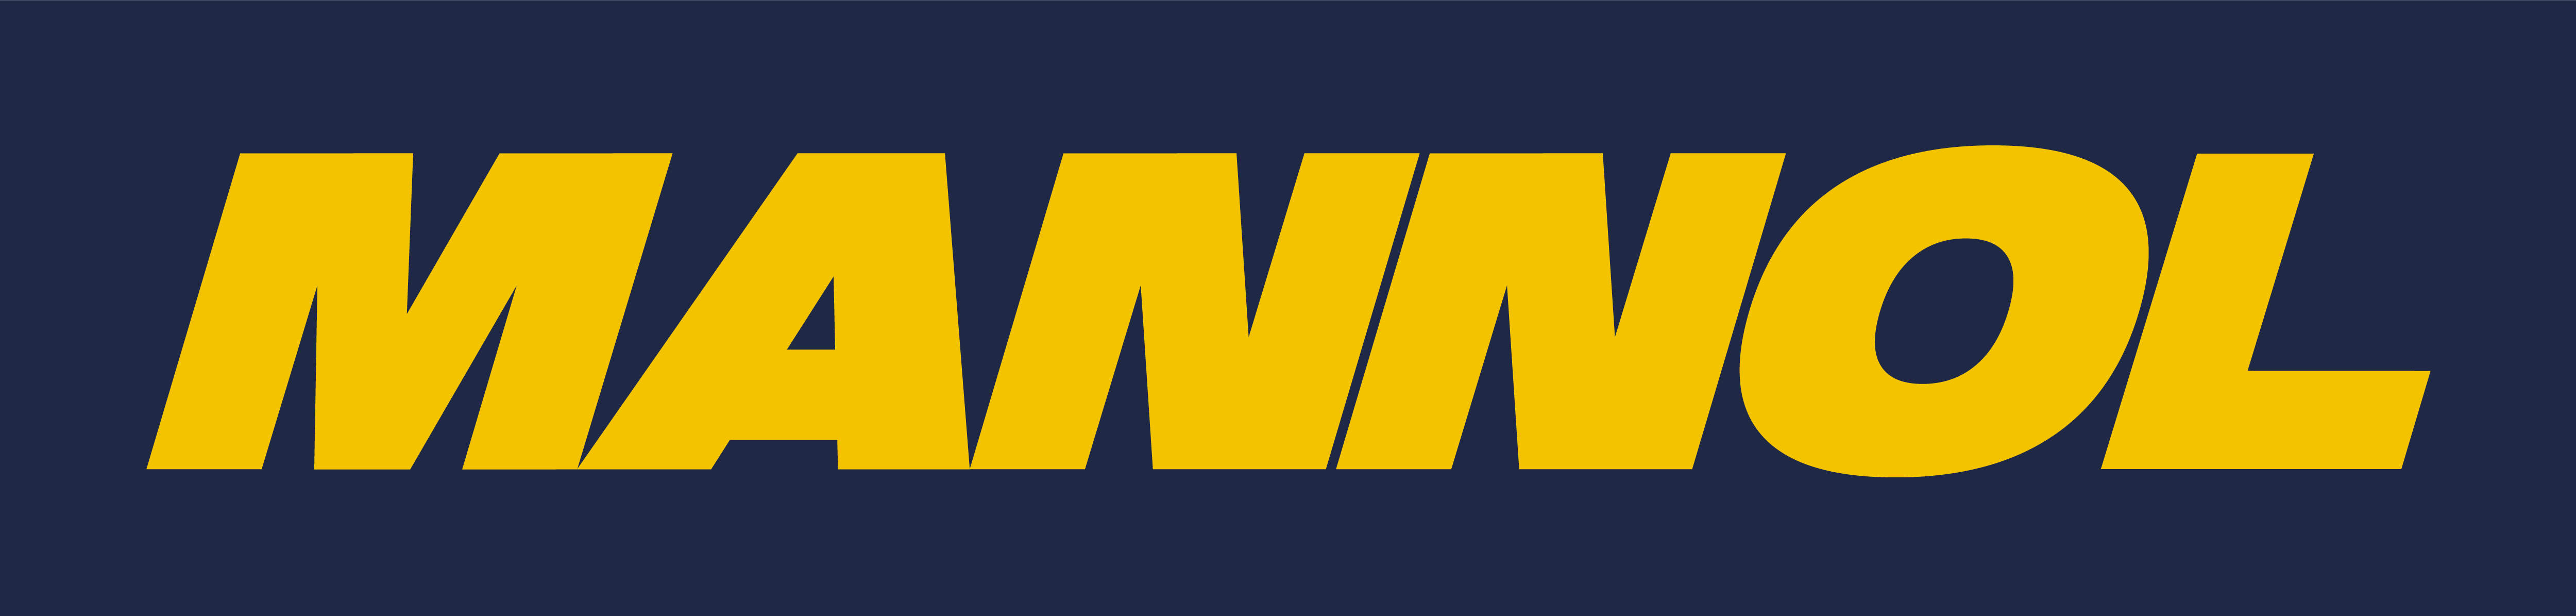 MANNOL_logo_yellow_navy